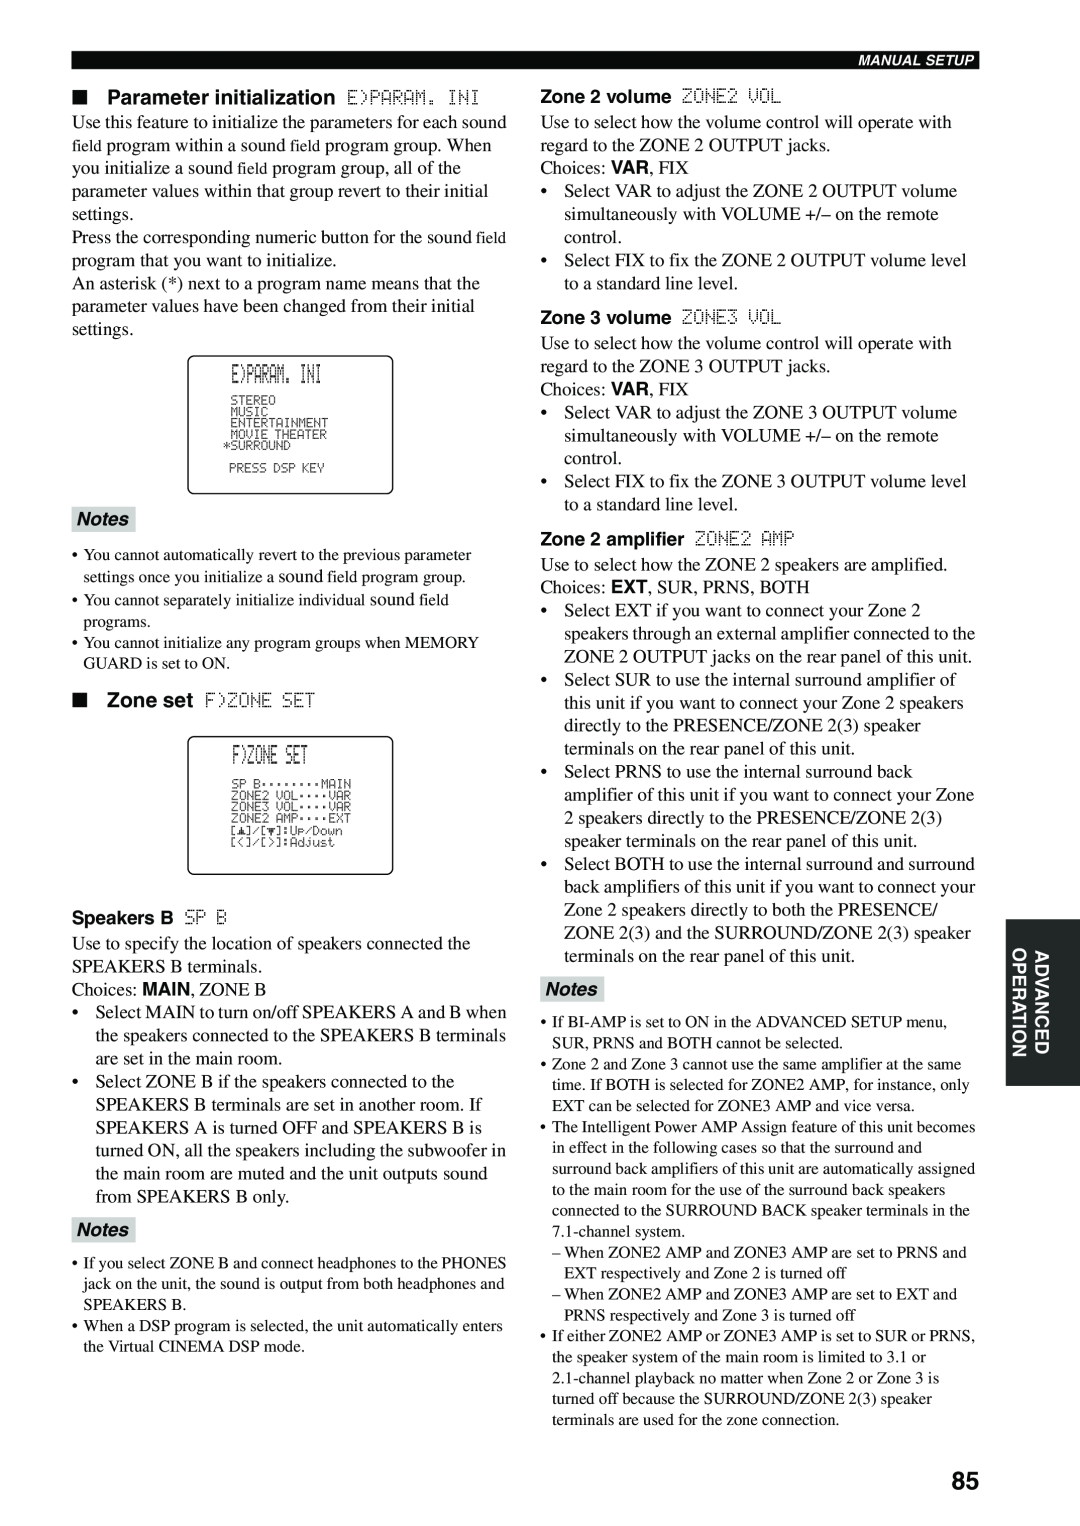 Yamaha HTR-5990 owner manual Eparam. Ini, Fzone Set, Parameter initialization EPARAM. INI, Notes 